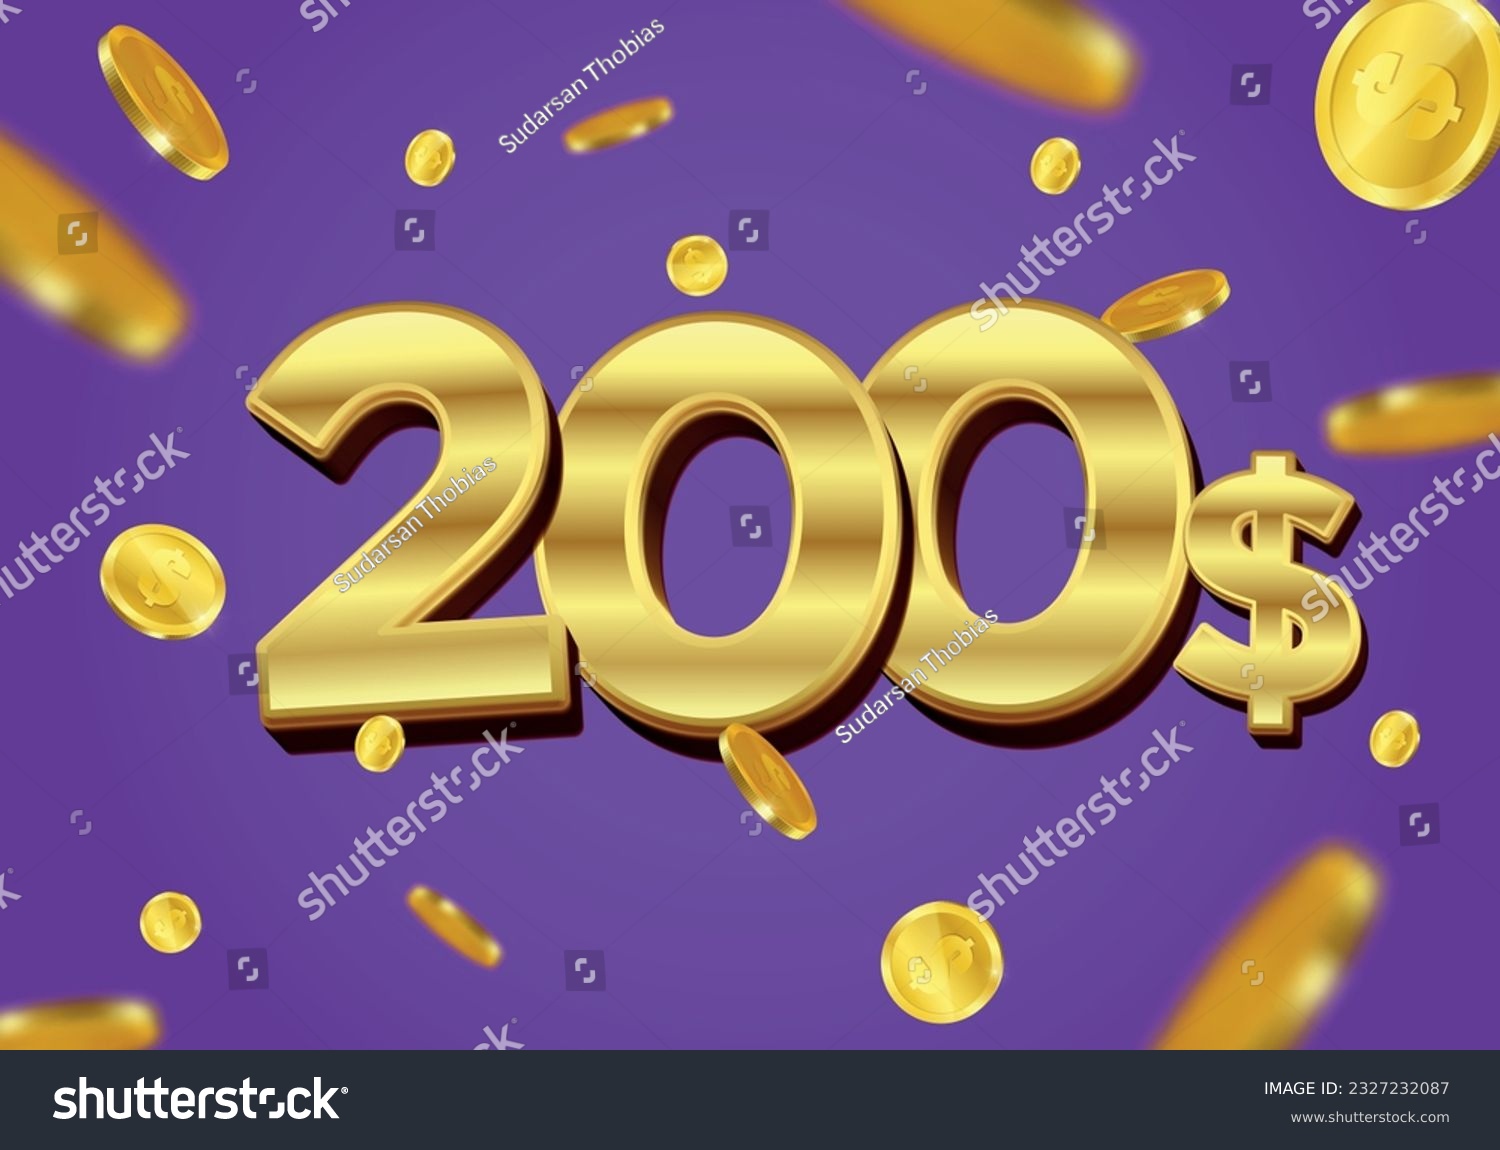 SVG of 200 Dollar gift or offer poster with flying gold coins. Two Hundred Dollars coupon voucher, cash back banner special offer, casino winner. Vector illustration. svg